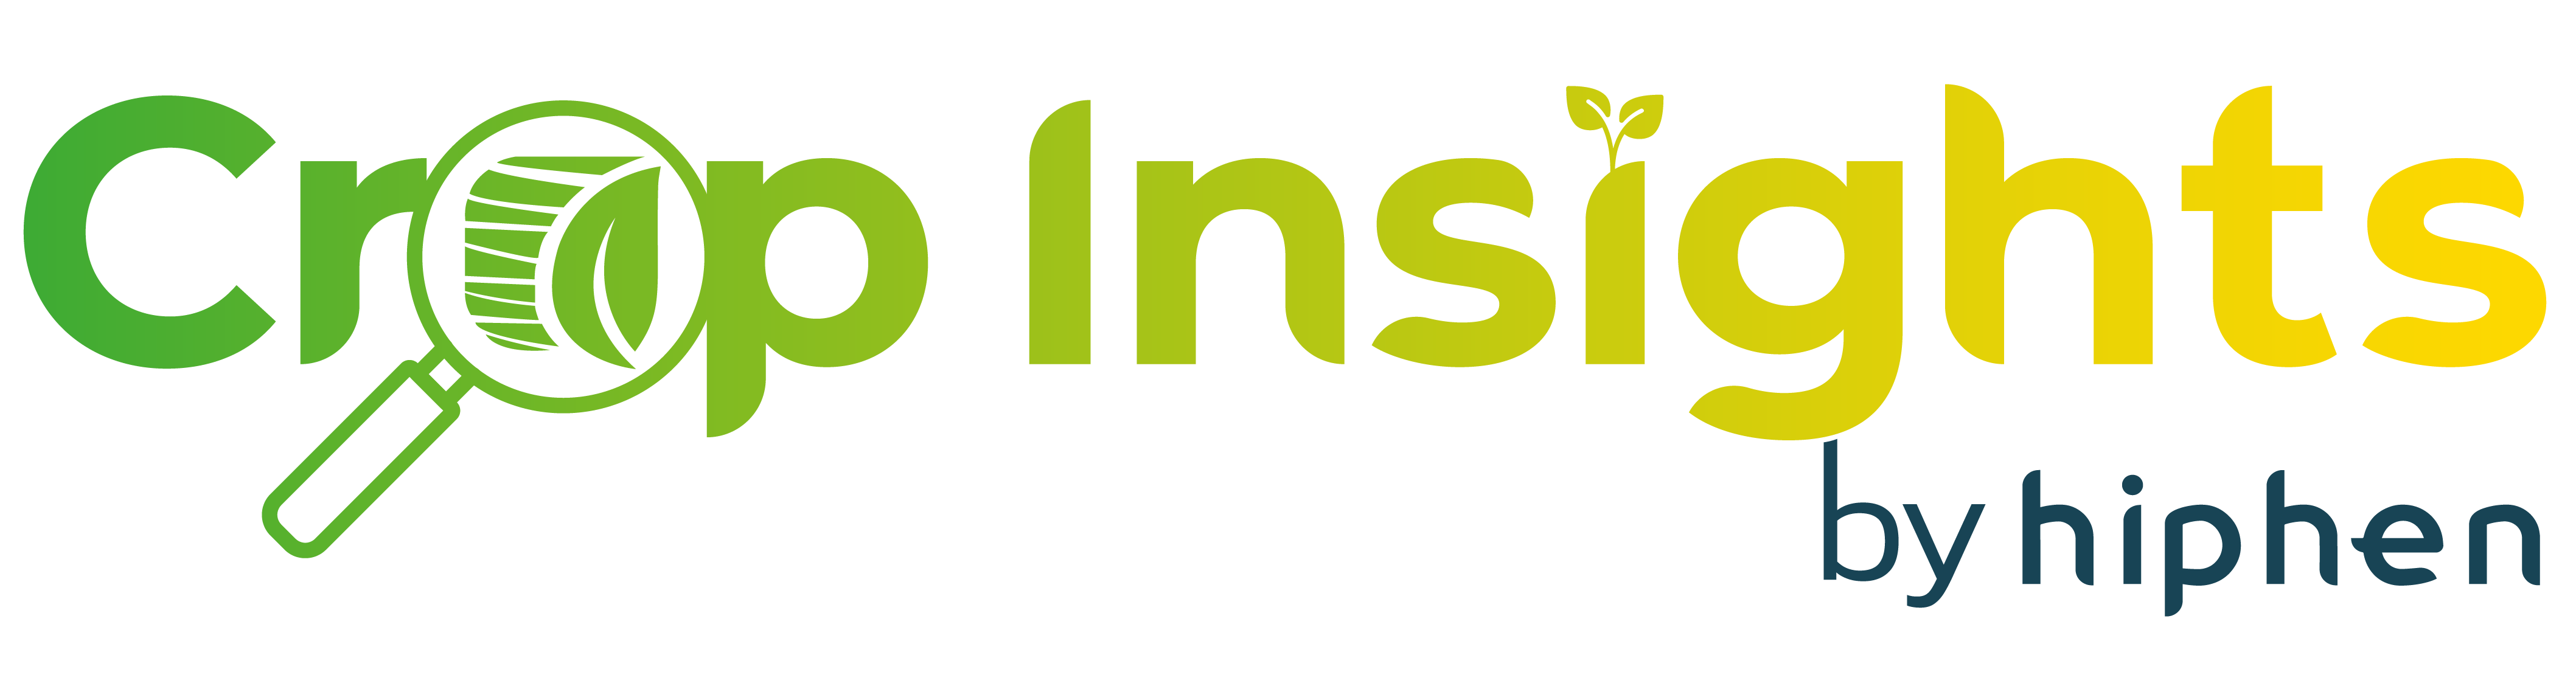 crop insights logo green yellow shade